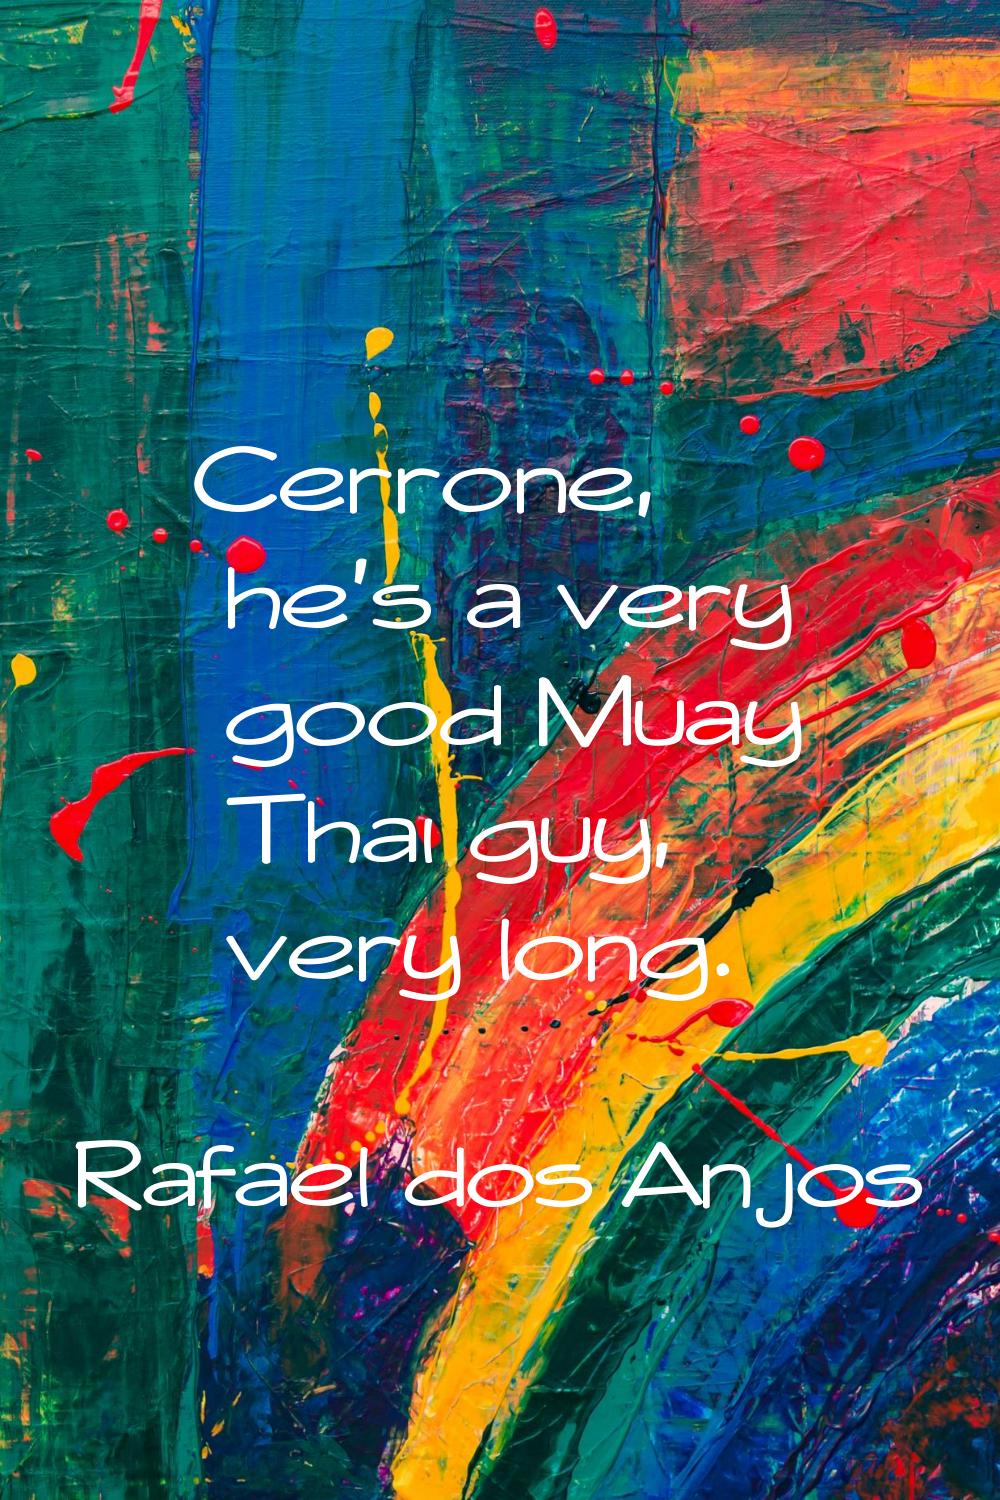 Cerrone, he's a very good Muay Thai guy, very long.